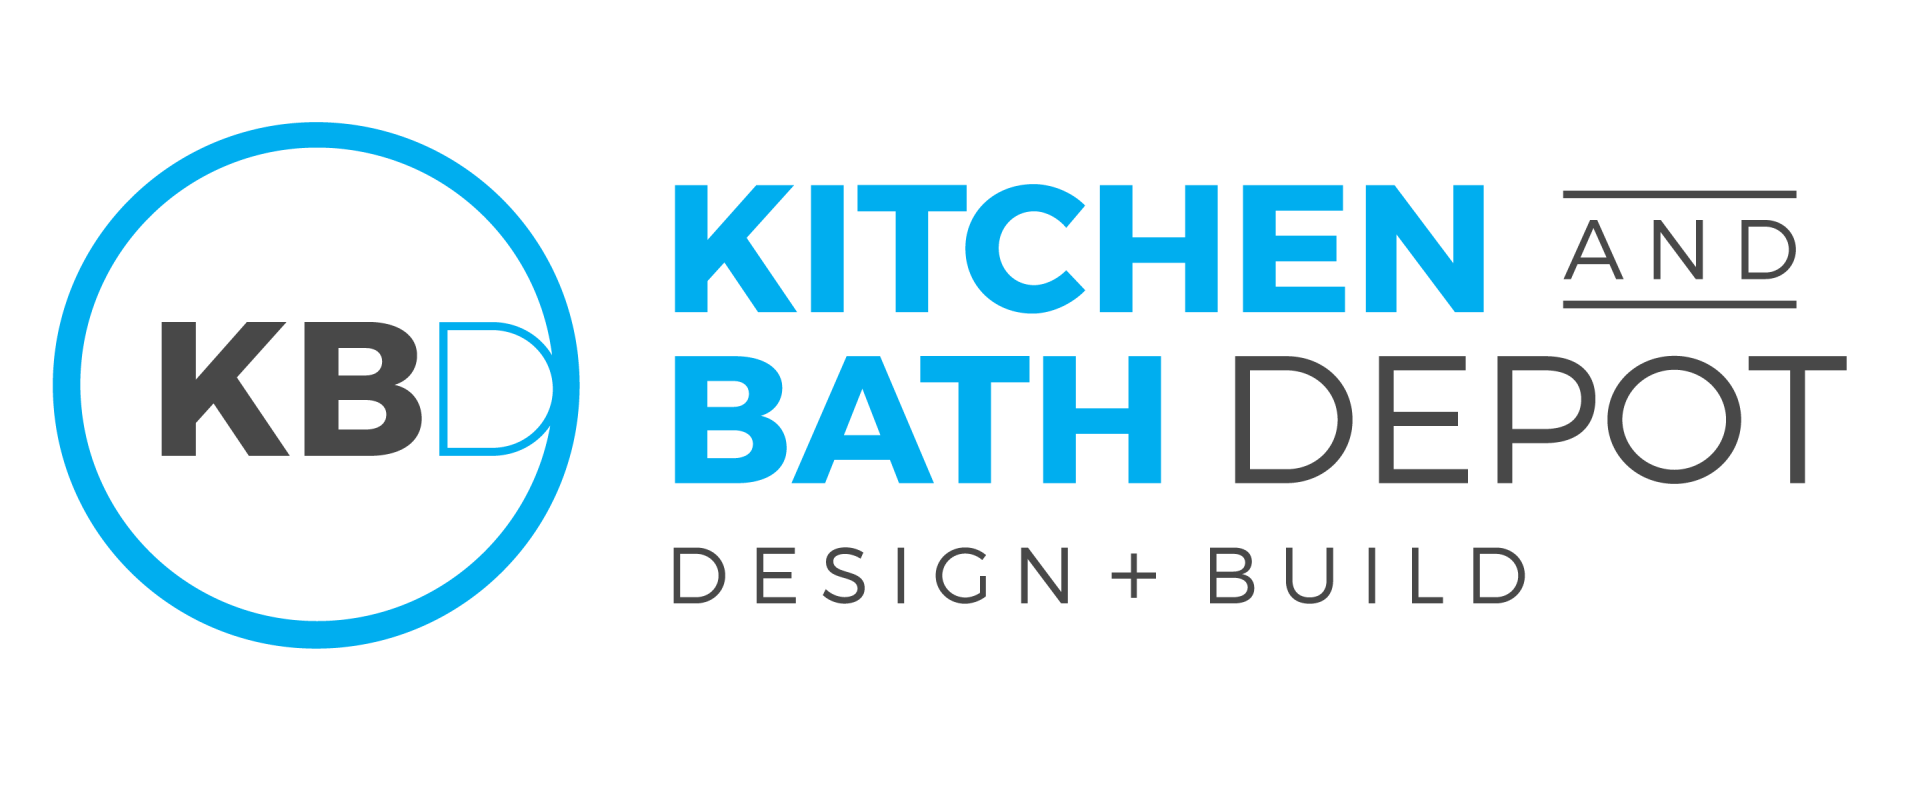 Socializing in Style - Kitchen & Bath Design News